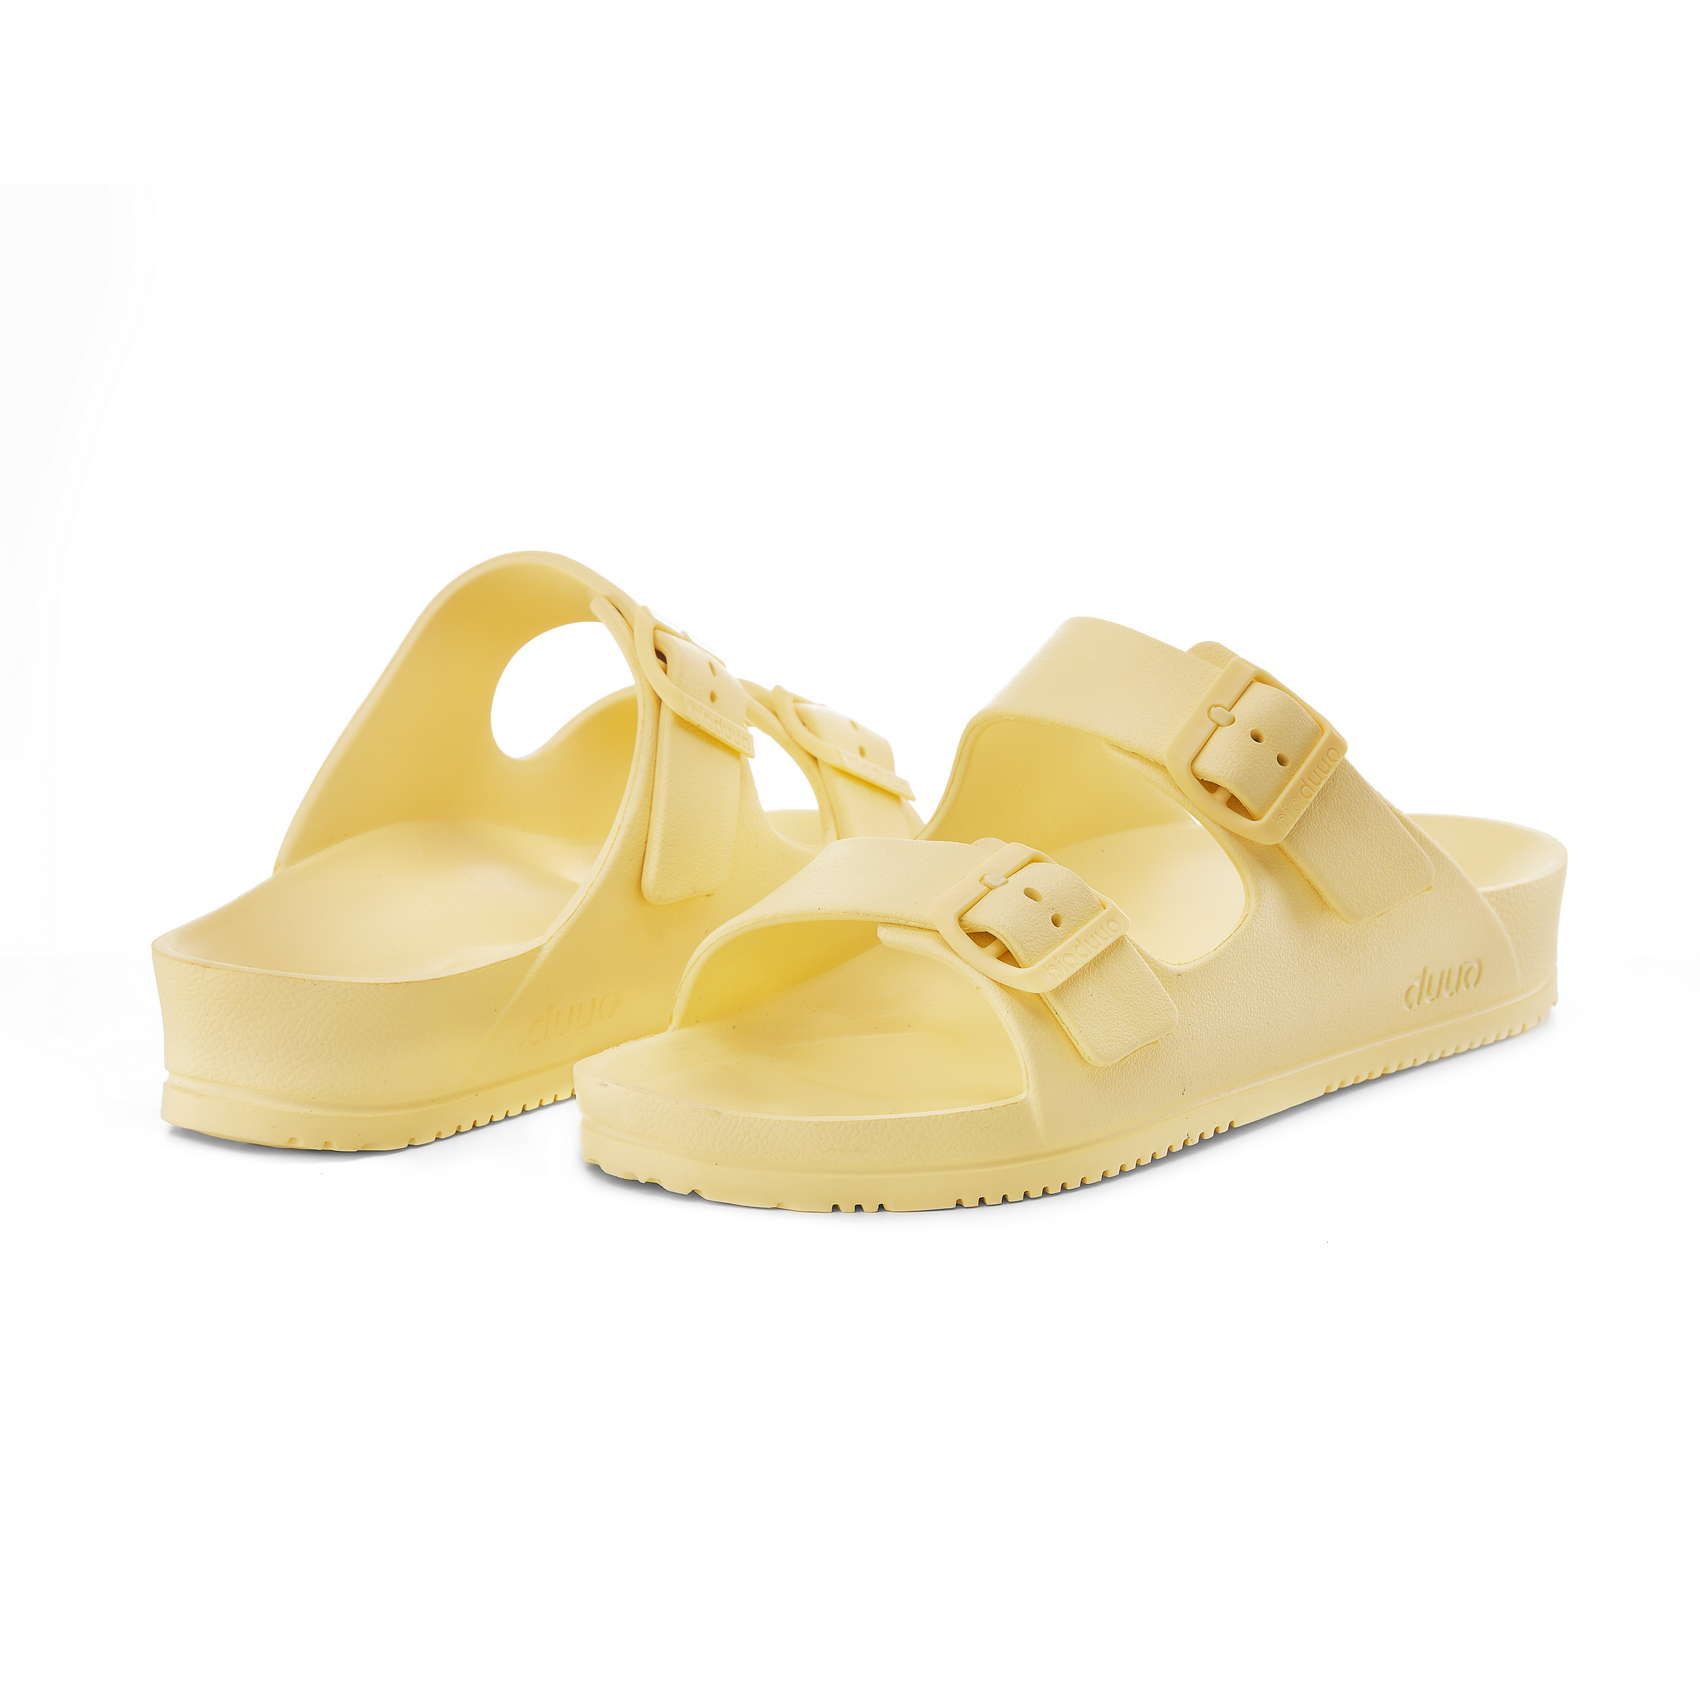 Flat sandal block color in yellow